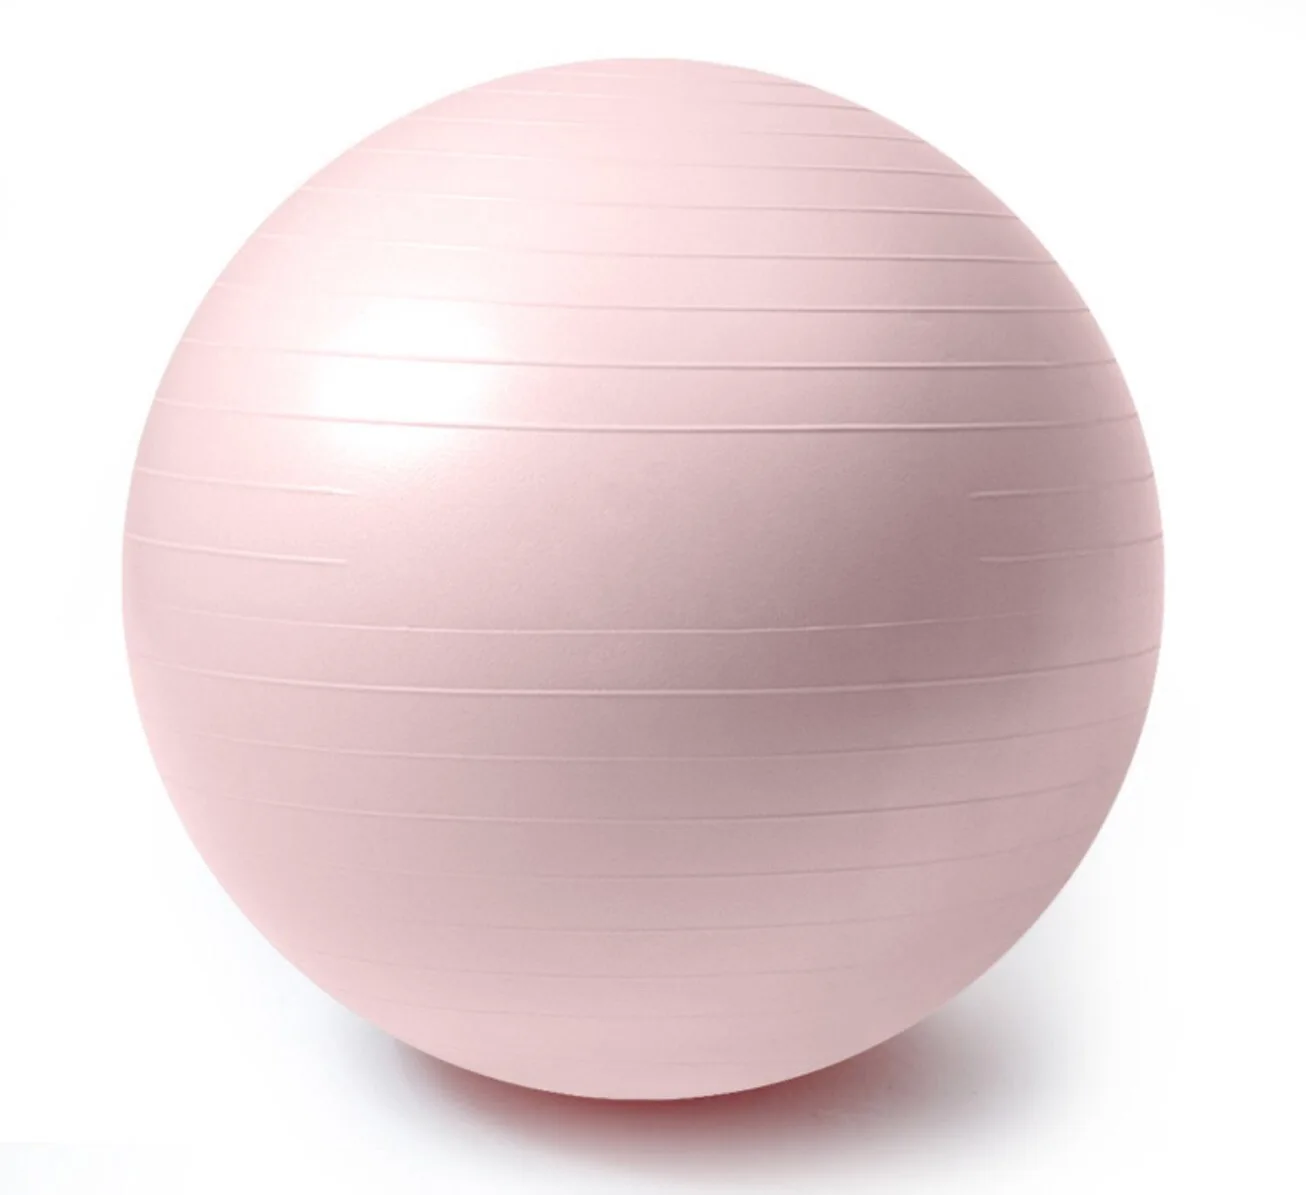 
FULI HOT sale custom message gym ball for home exercise anti-burst yoga fitness ball 